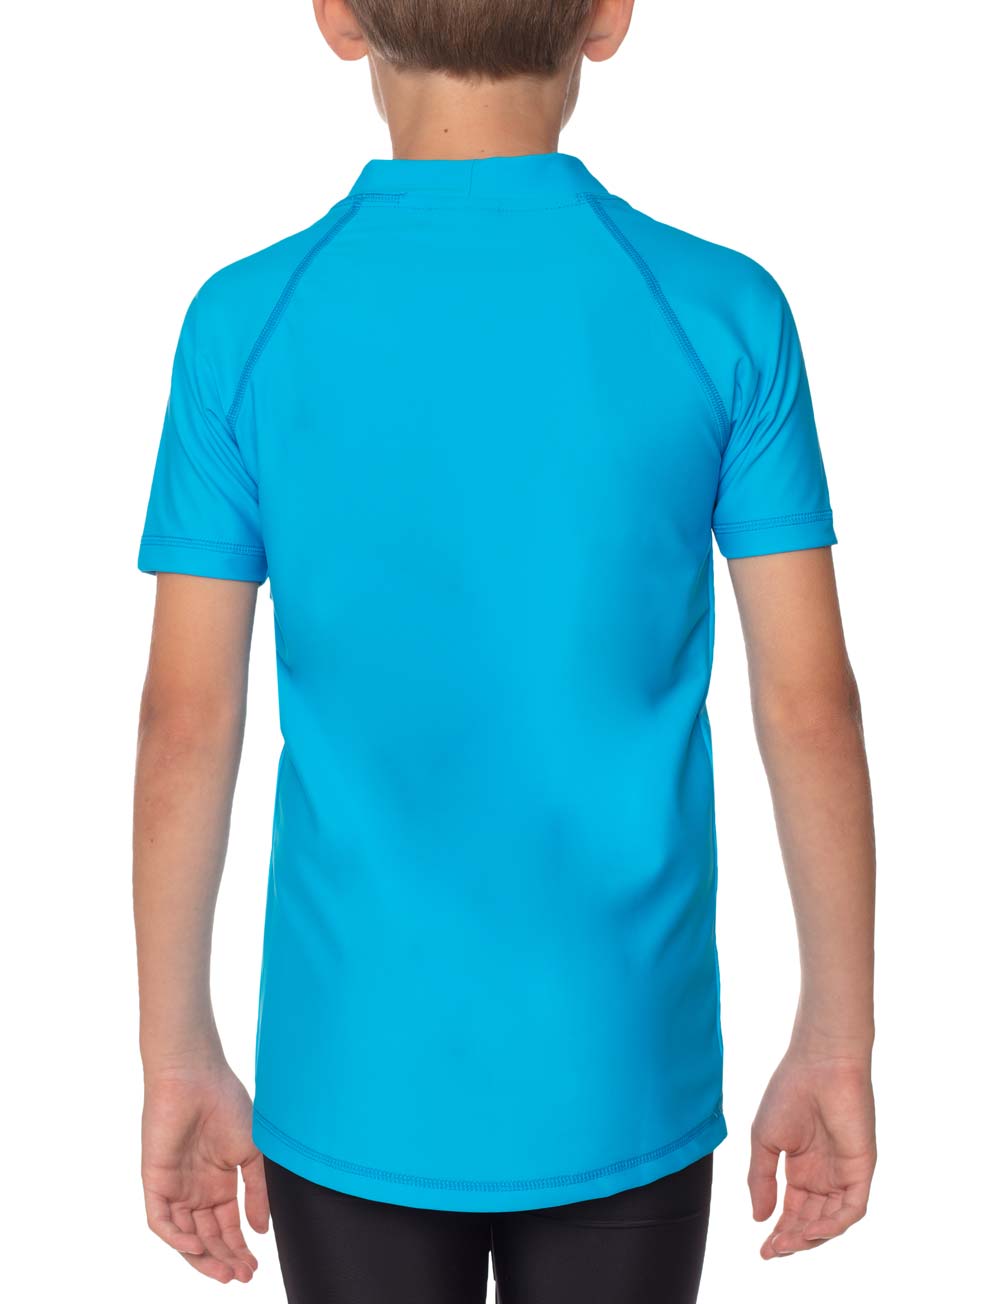 Kinder UV Shirt - Igelchen (kurzarm)